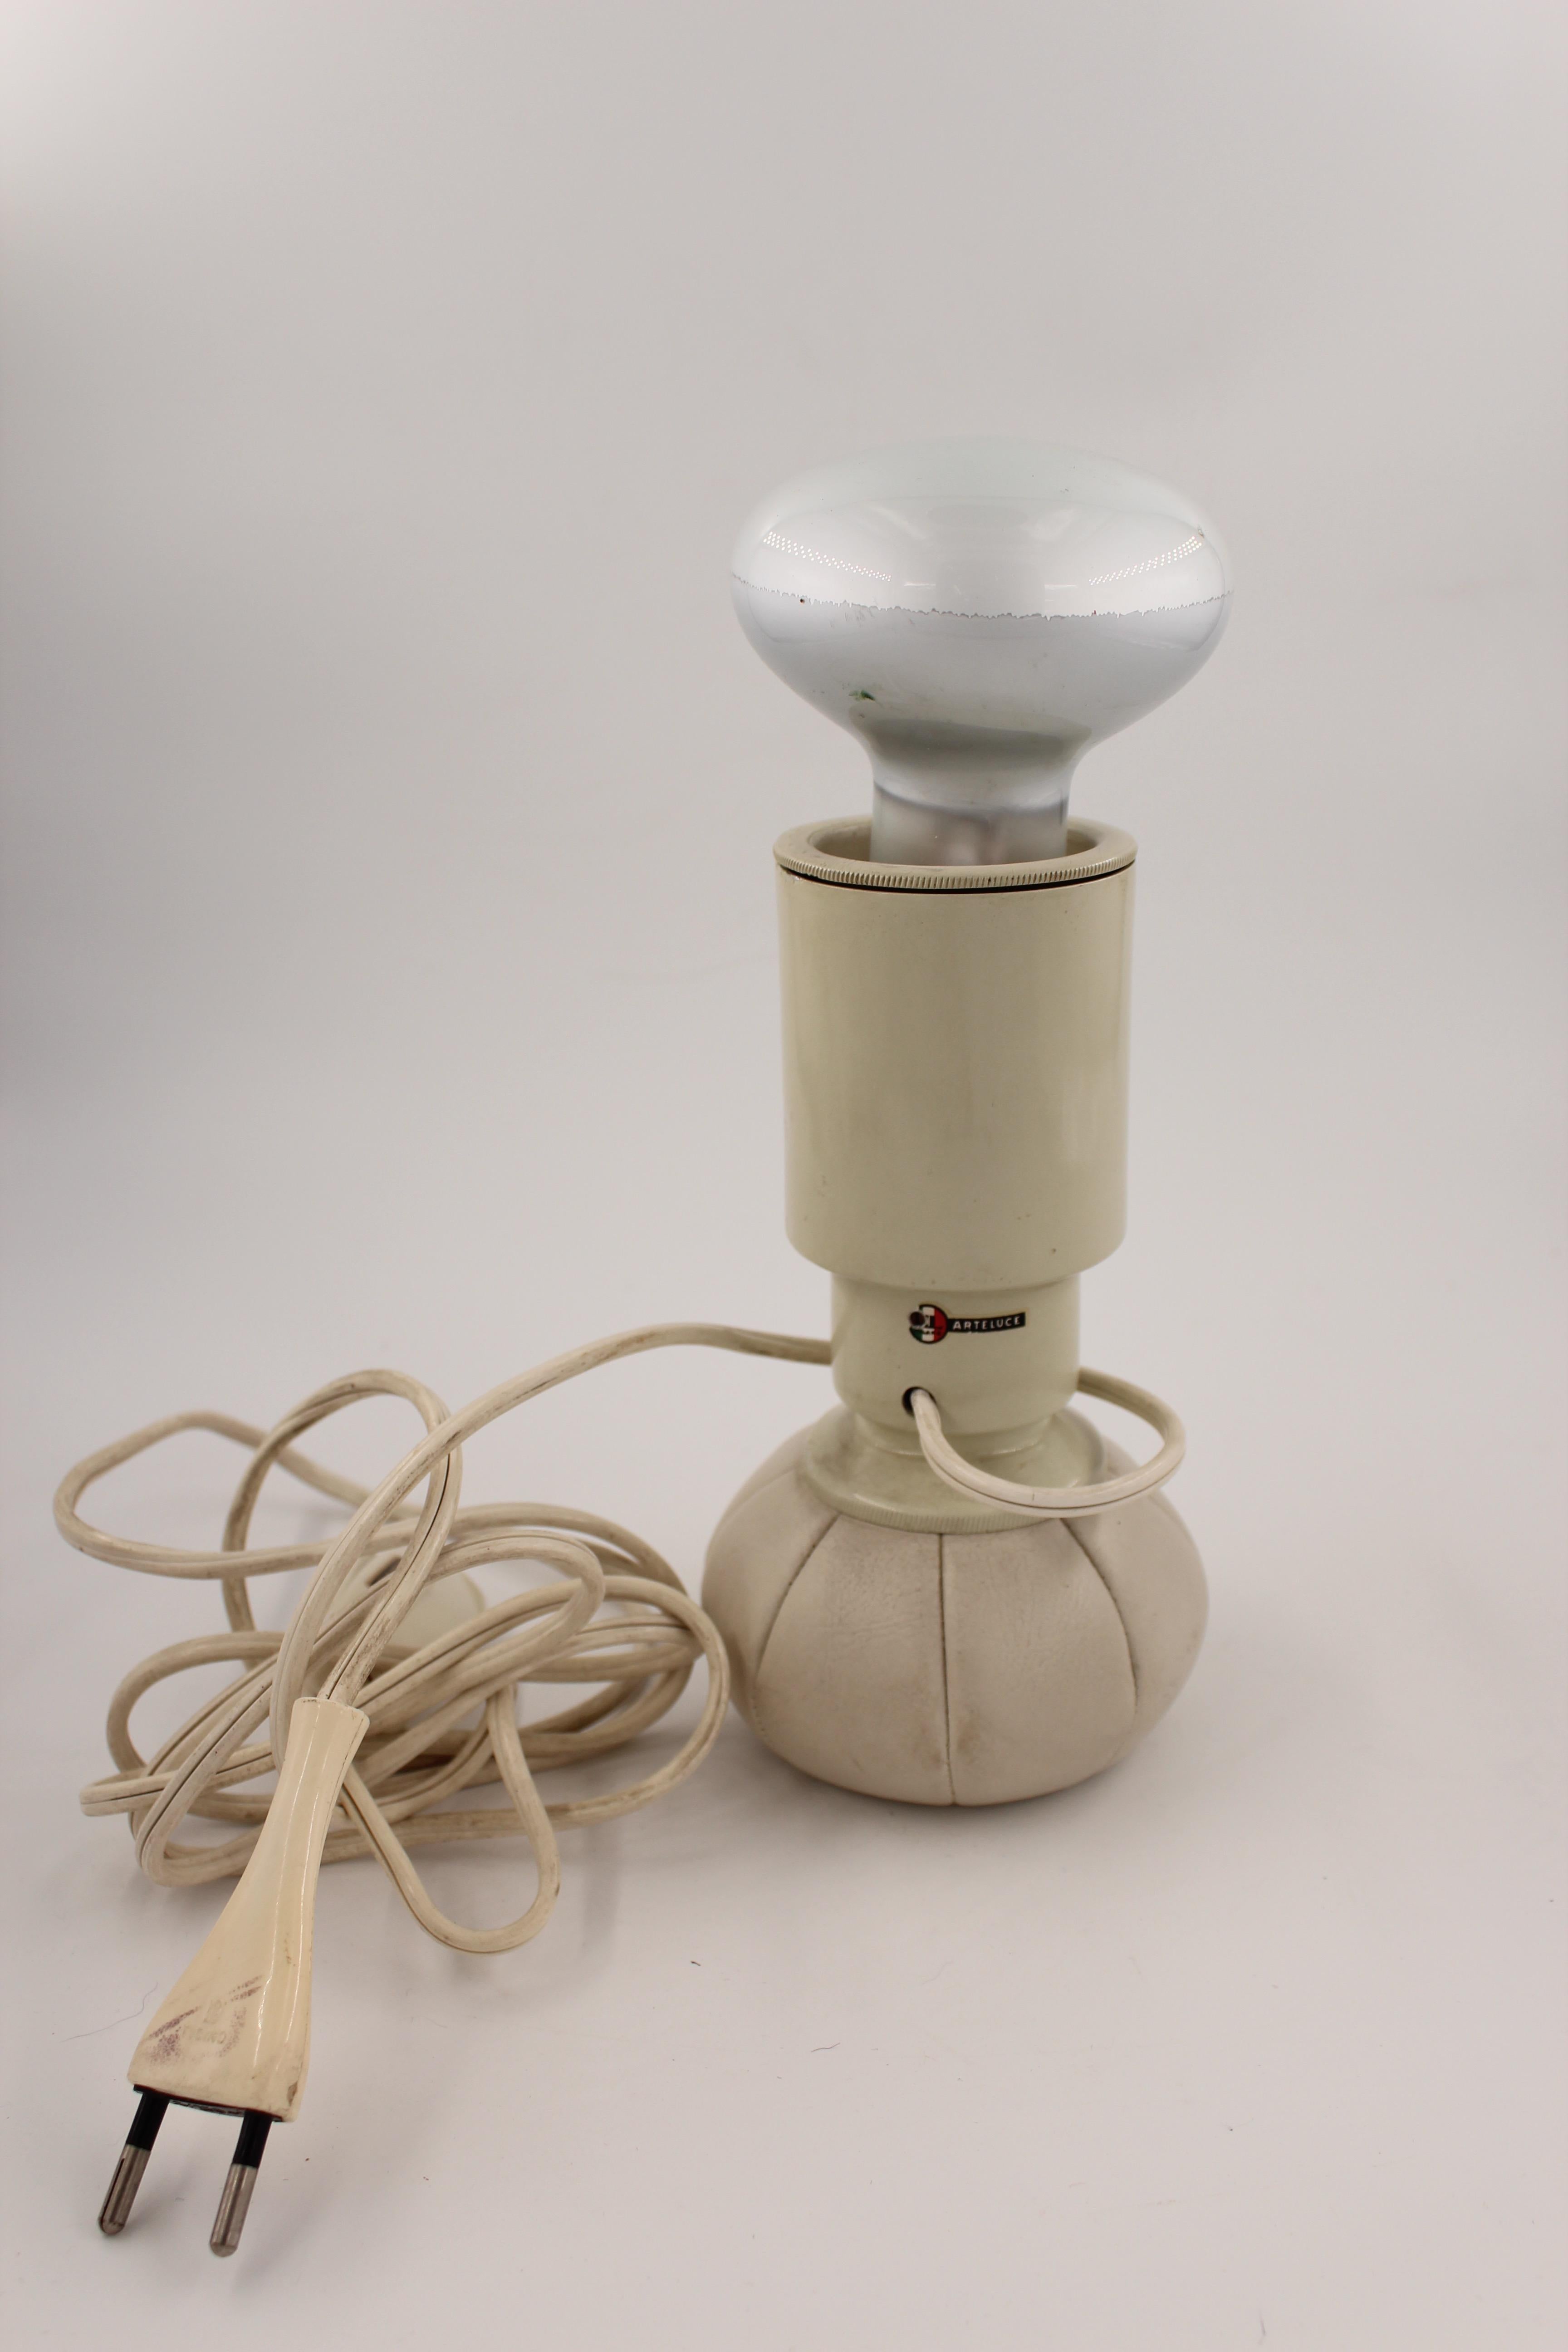 Gino Sarfatti off White 600 Table Lamp for Arteluce, Italy, 1960 4